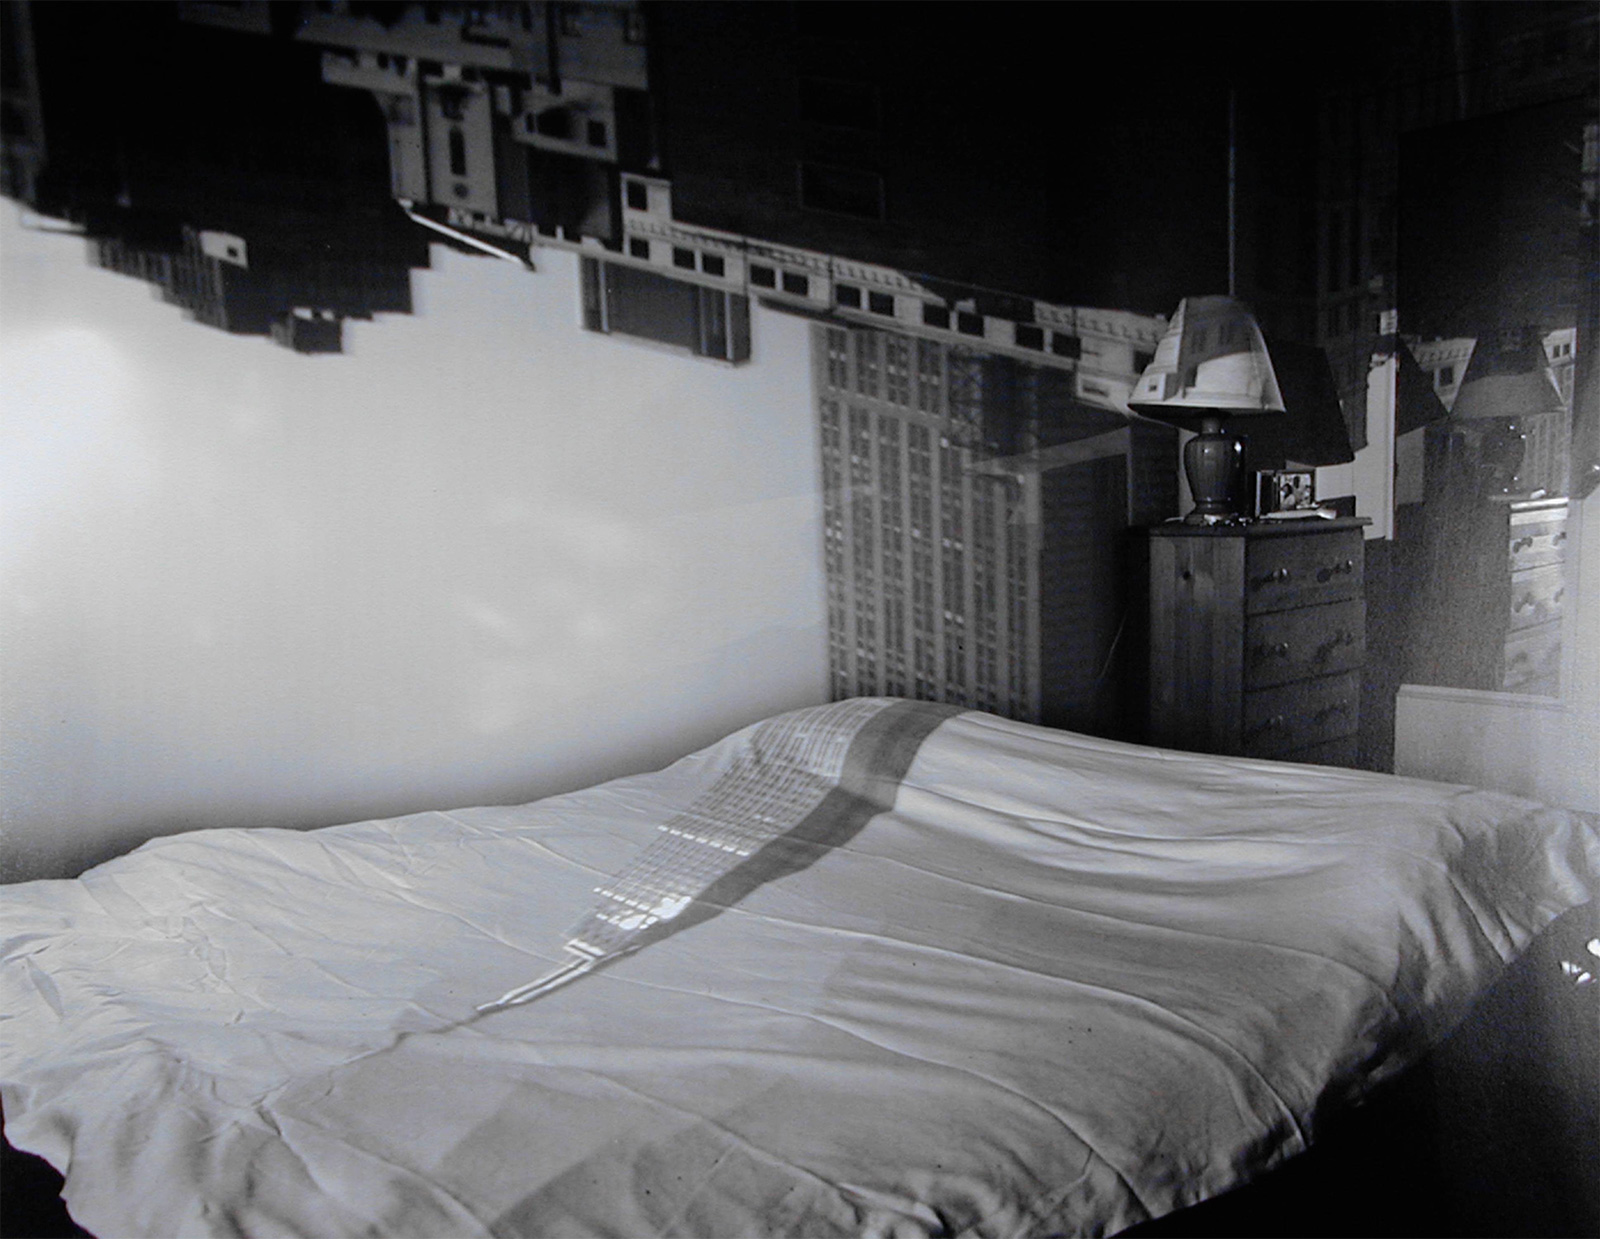 Abelardo Morell, Camera Obscura: Empire State Building in Bedroom, 1994.